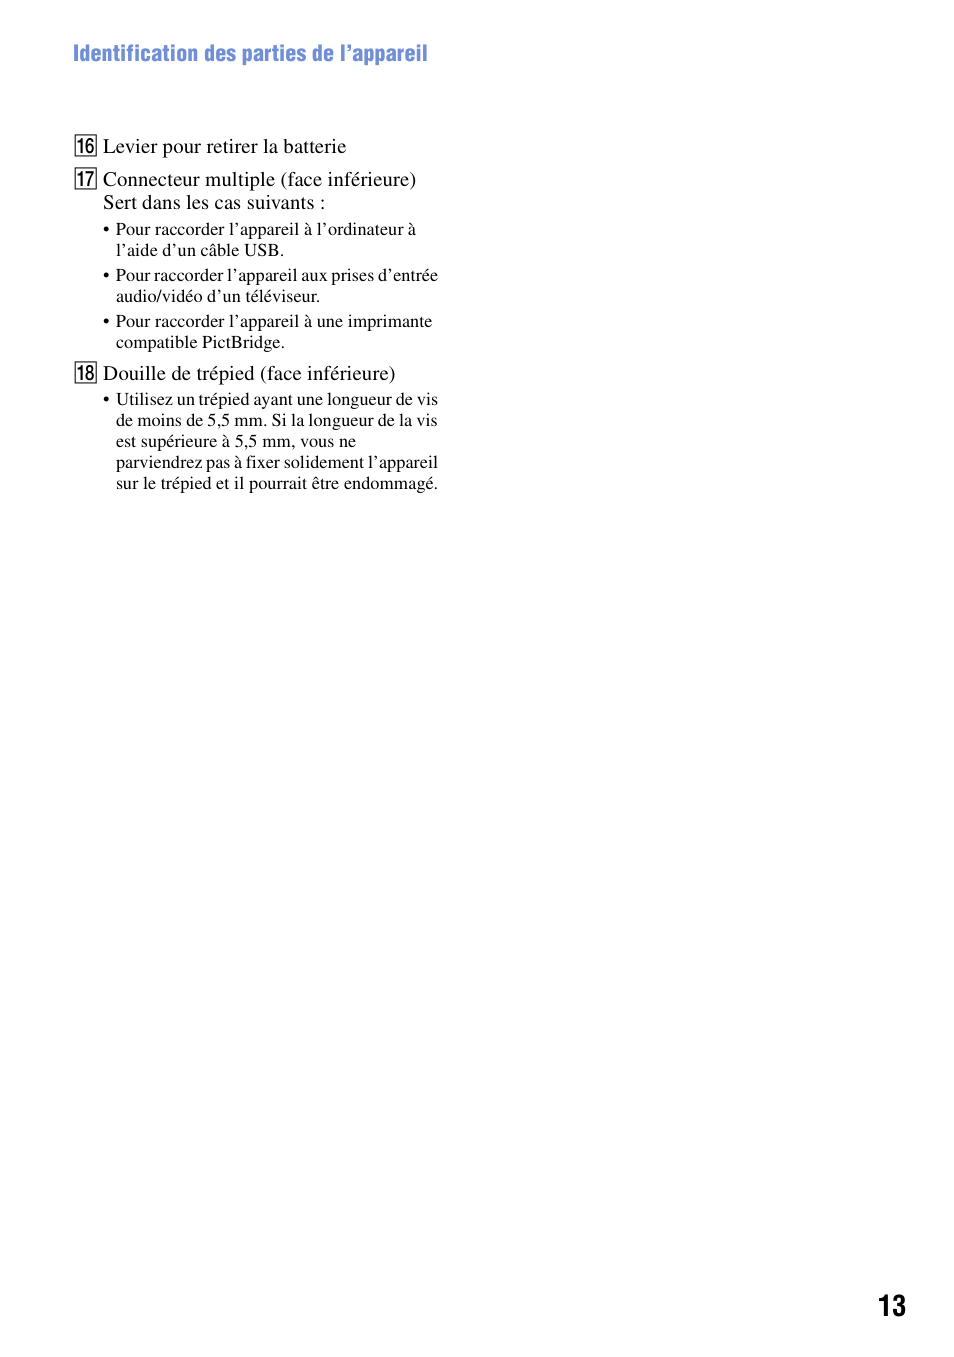 Sony DSC-T20 Manuel d'utilisation | Page 13 / 122